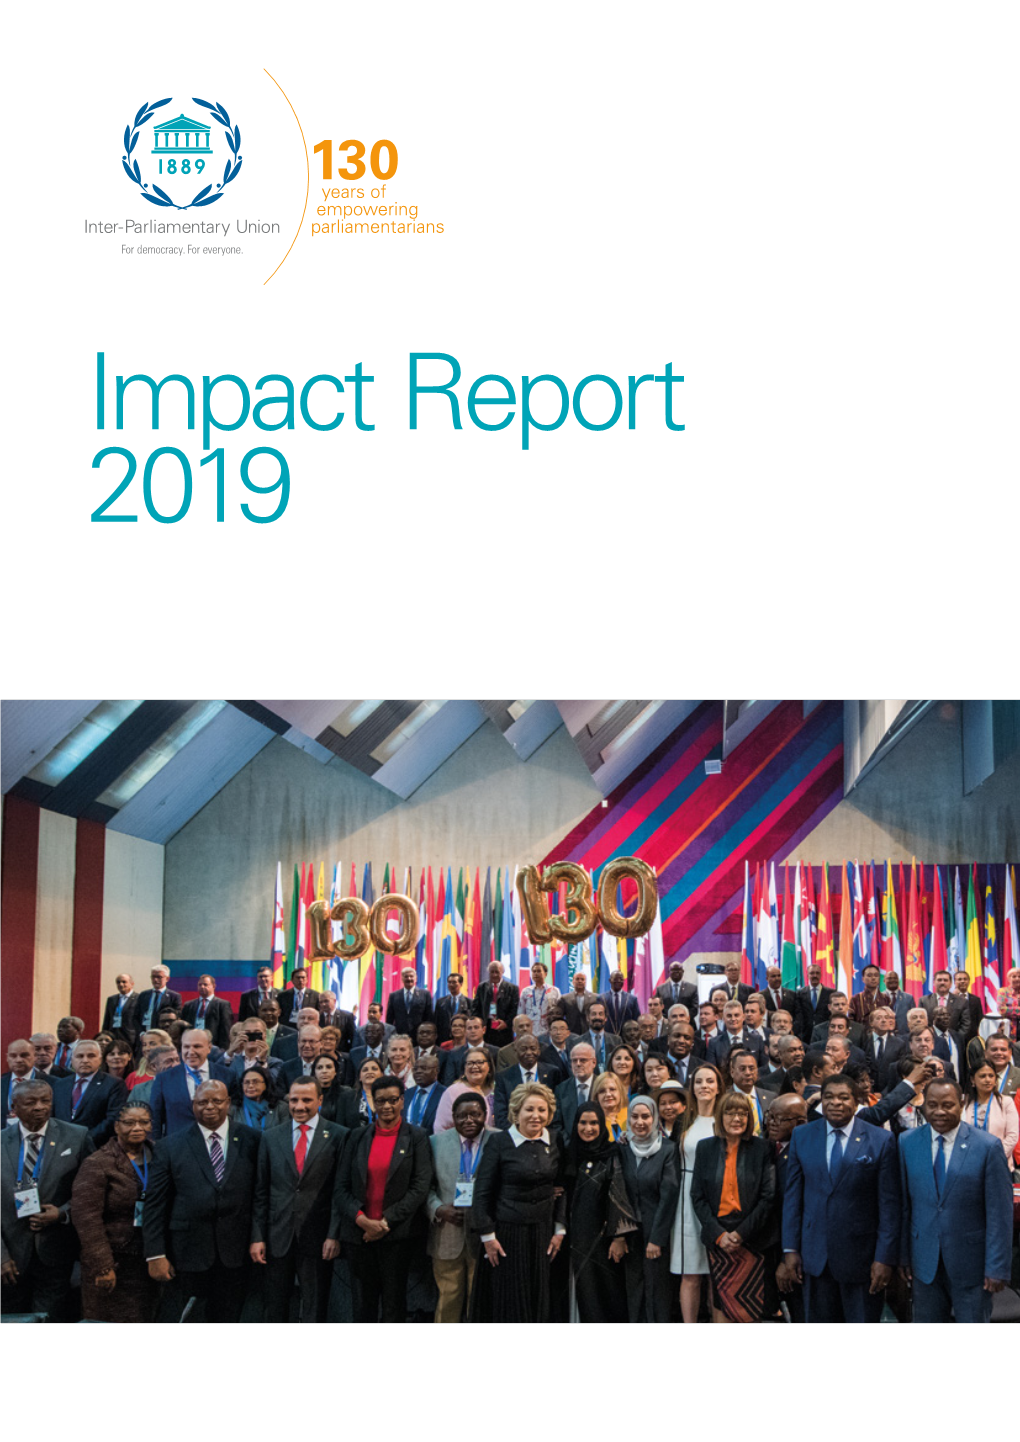 Impact Report 2019 the IPU